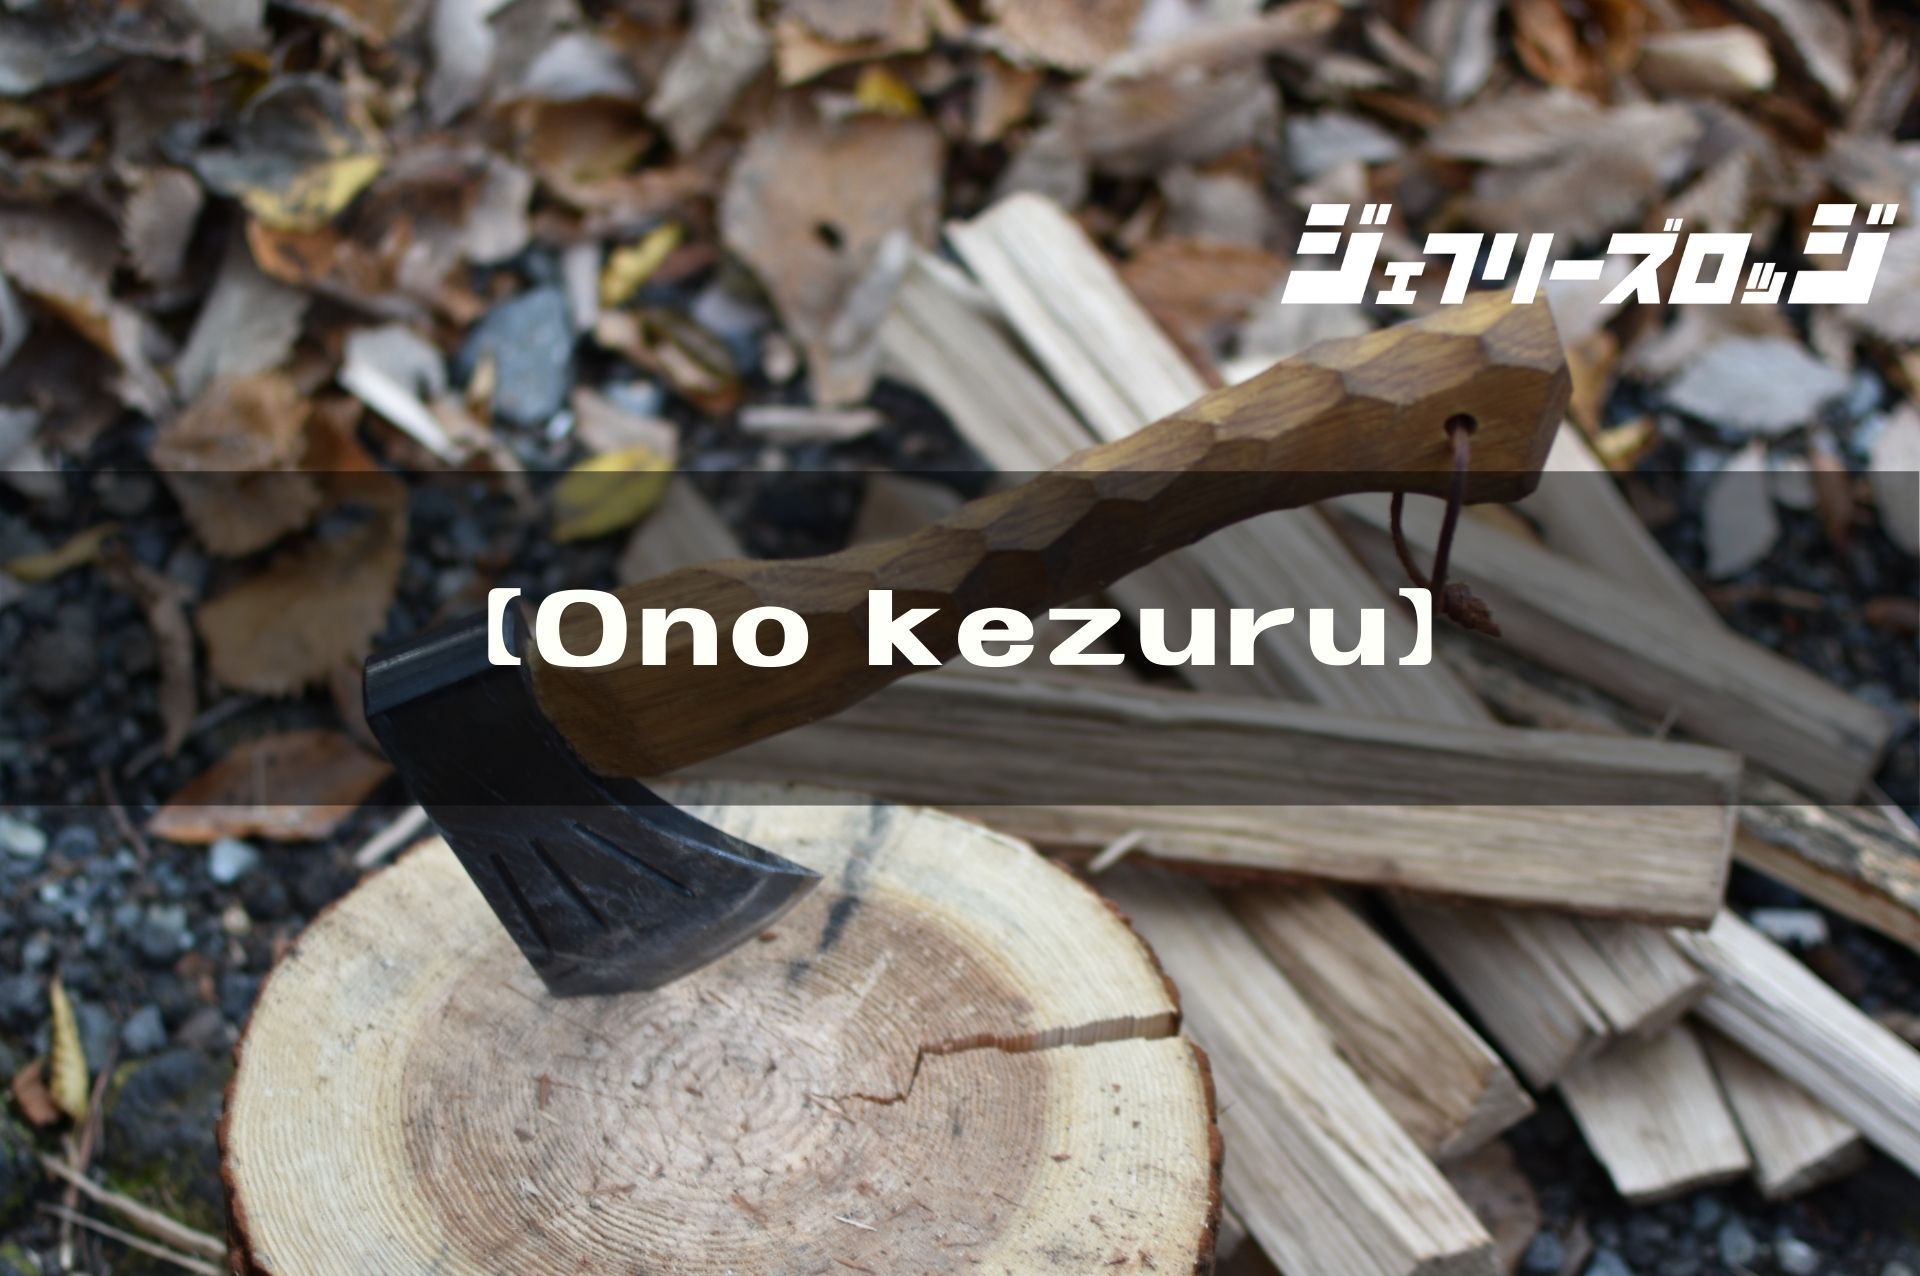 Ono kezuru 唯一無二な存在感が漂う手斧 by neru design works x